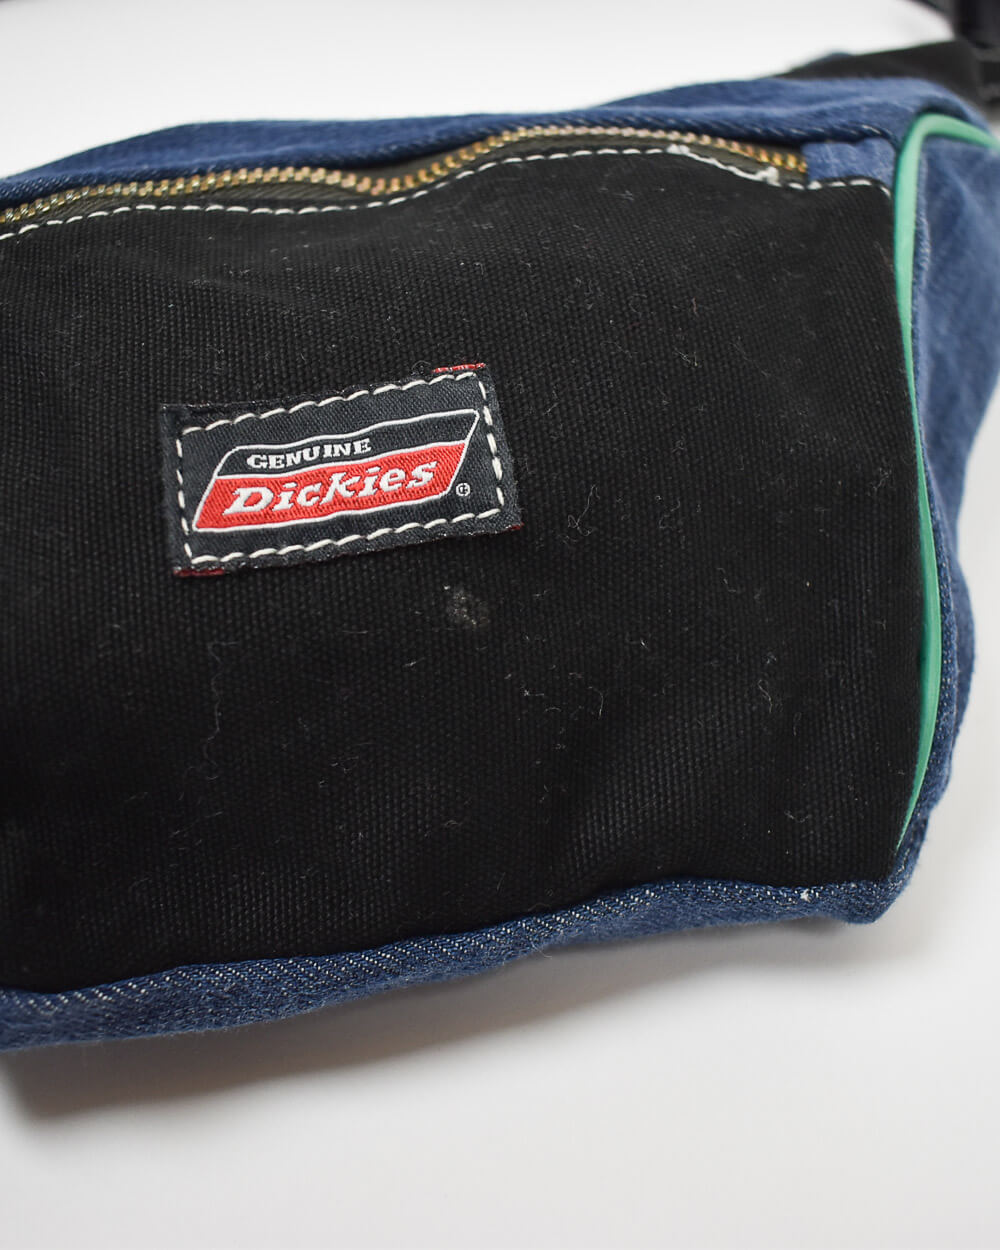  Dickies Reworked Bum Bag  